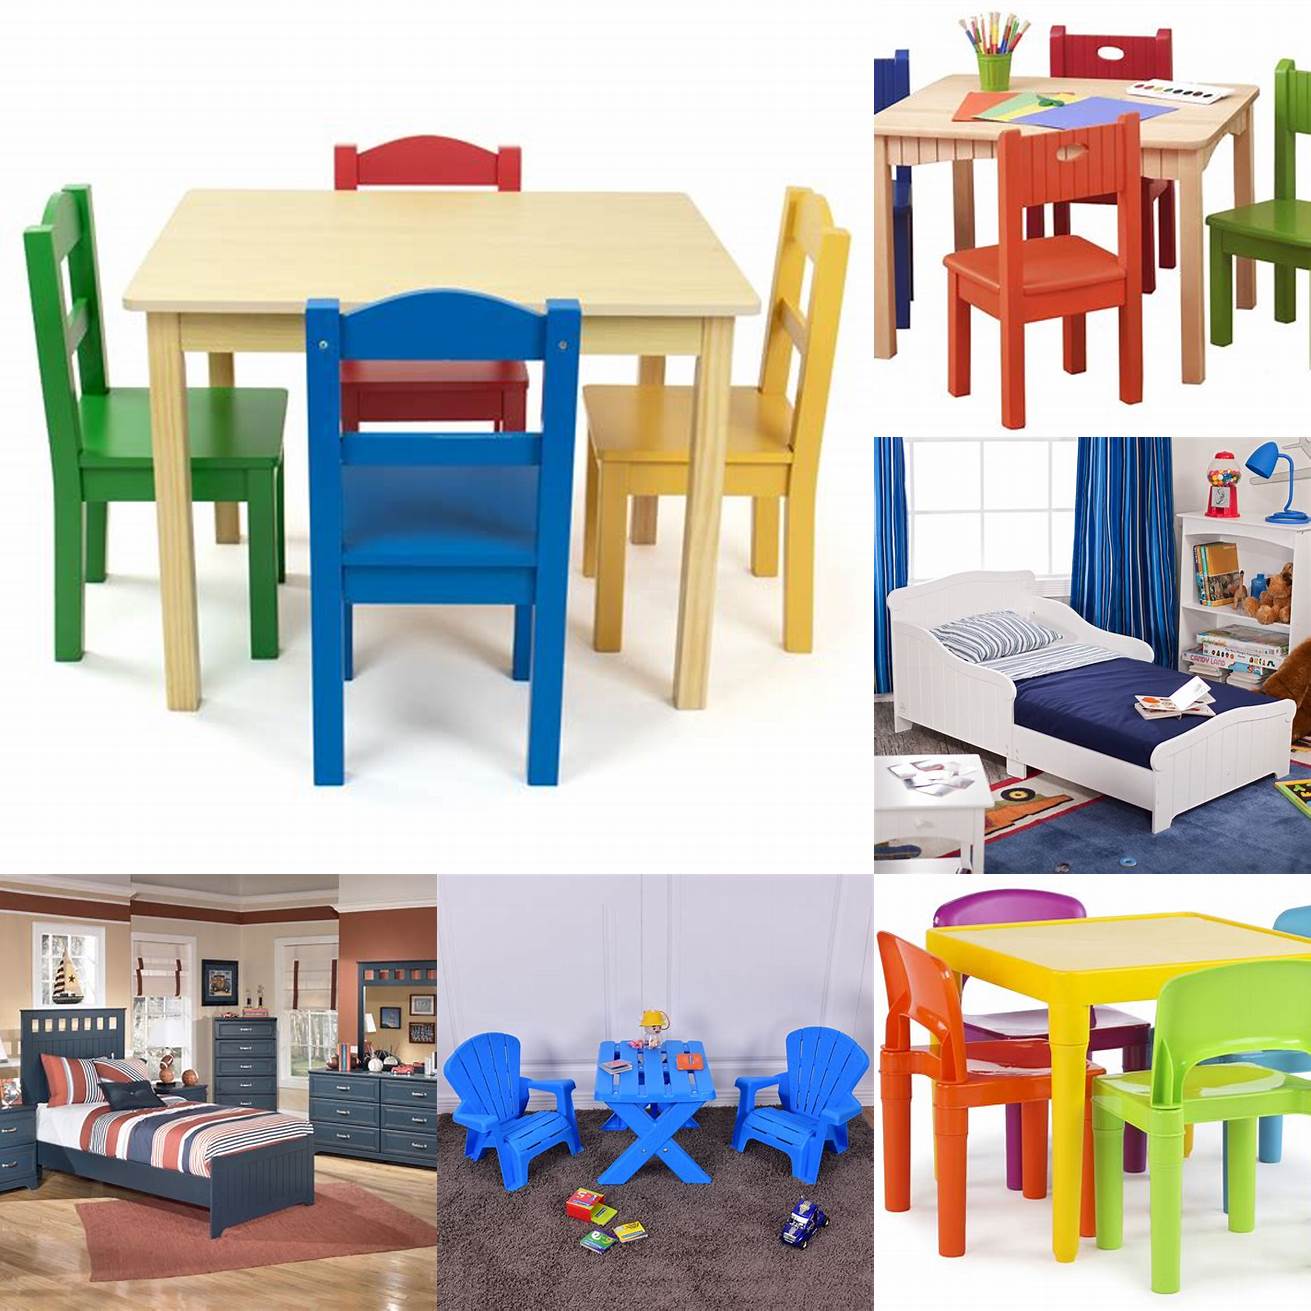 Childrens Furniture